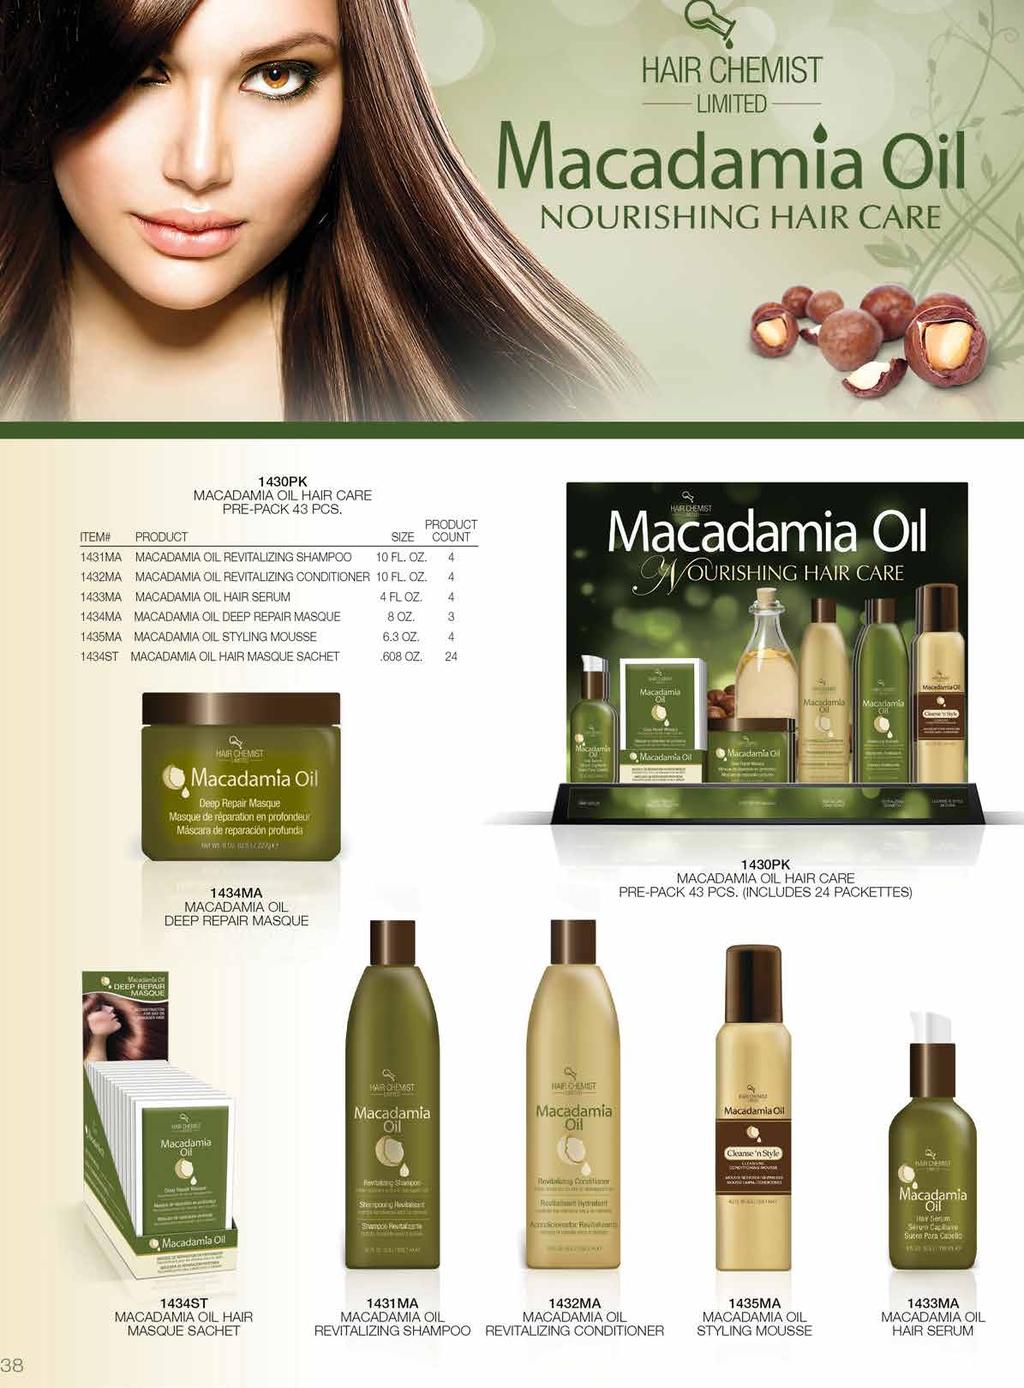 Macadamia Oil Hair Care 1430PK $550 Pre-pack 44pcs,